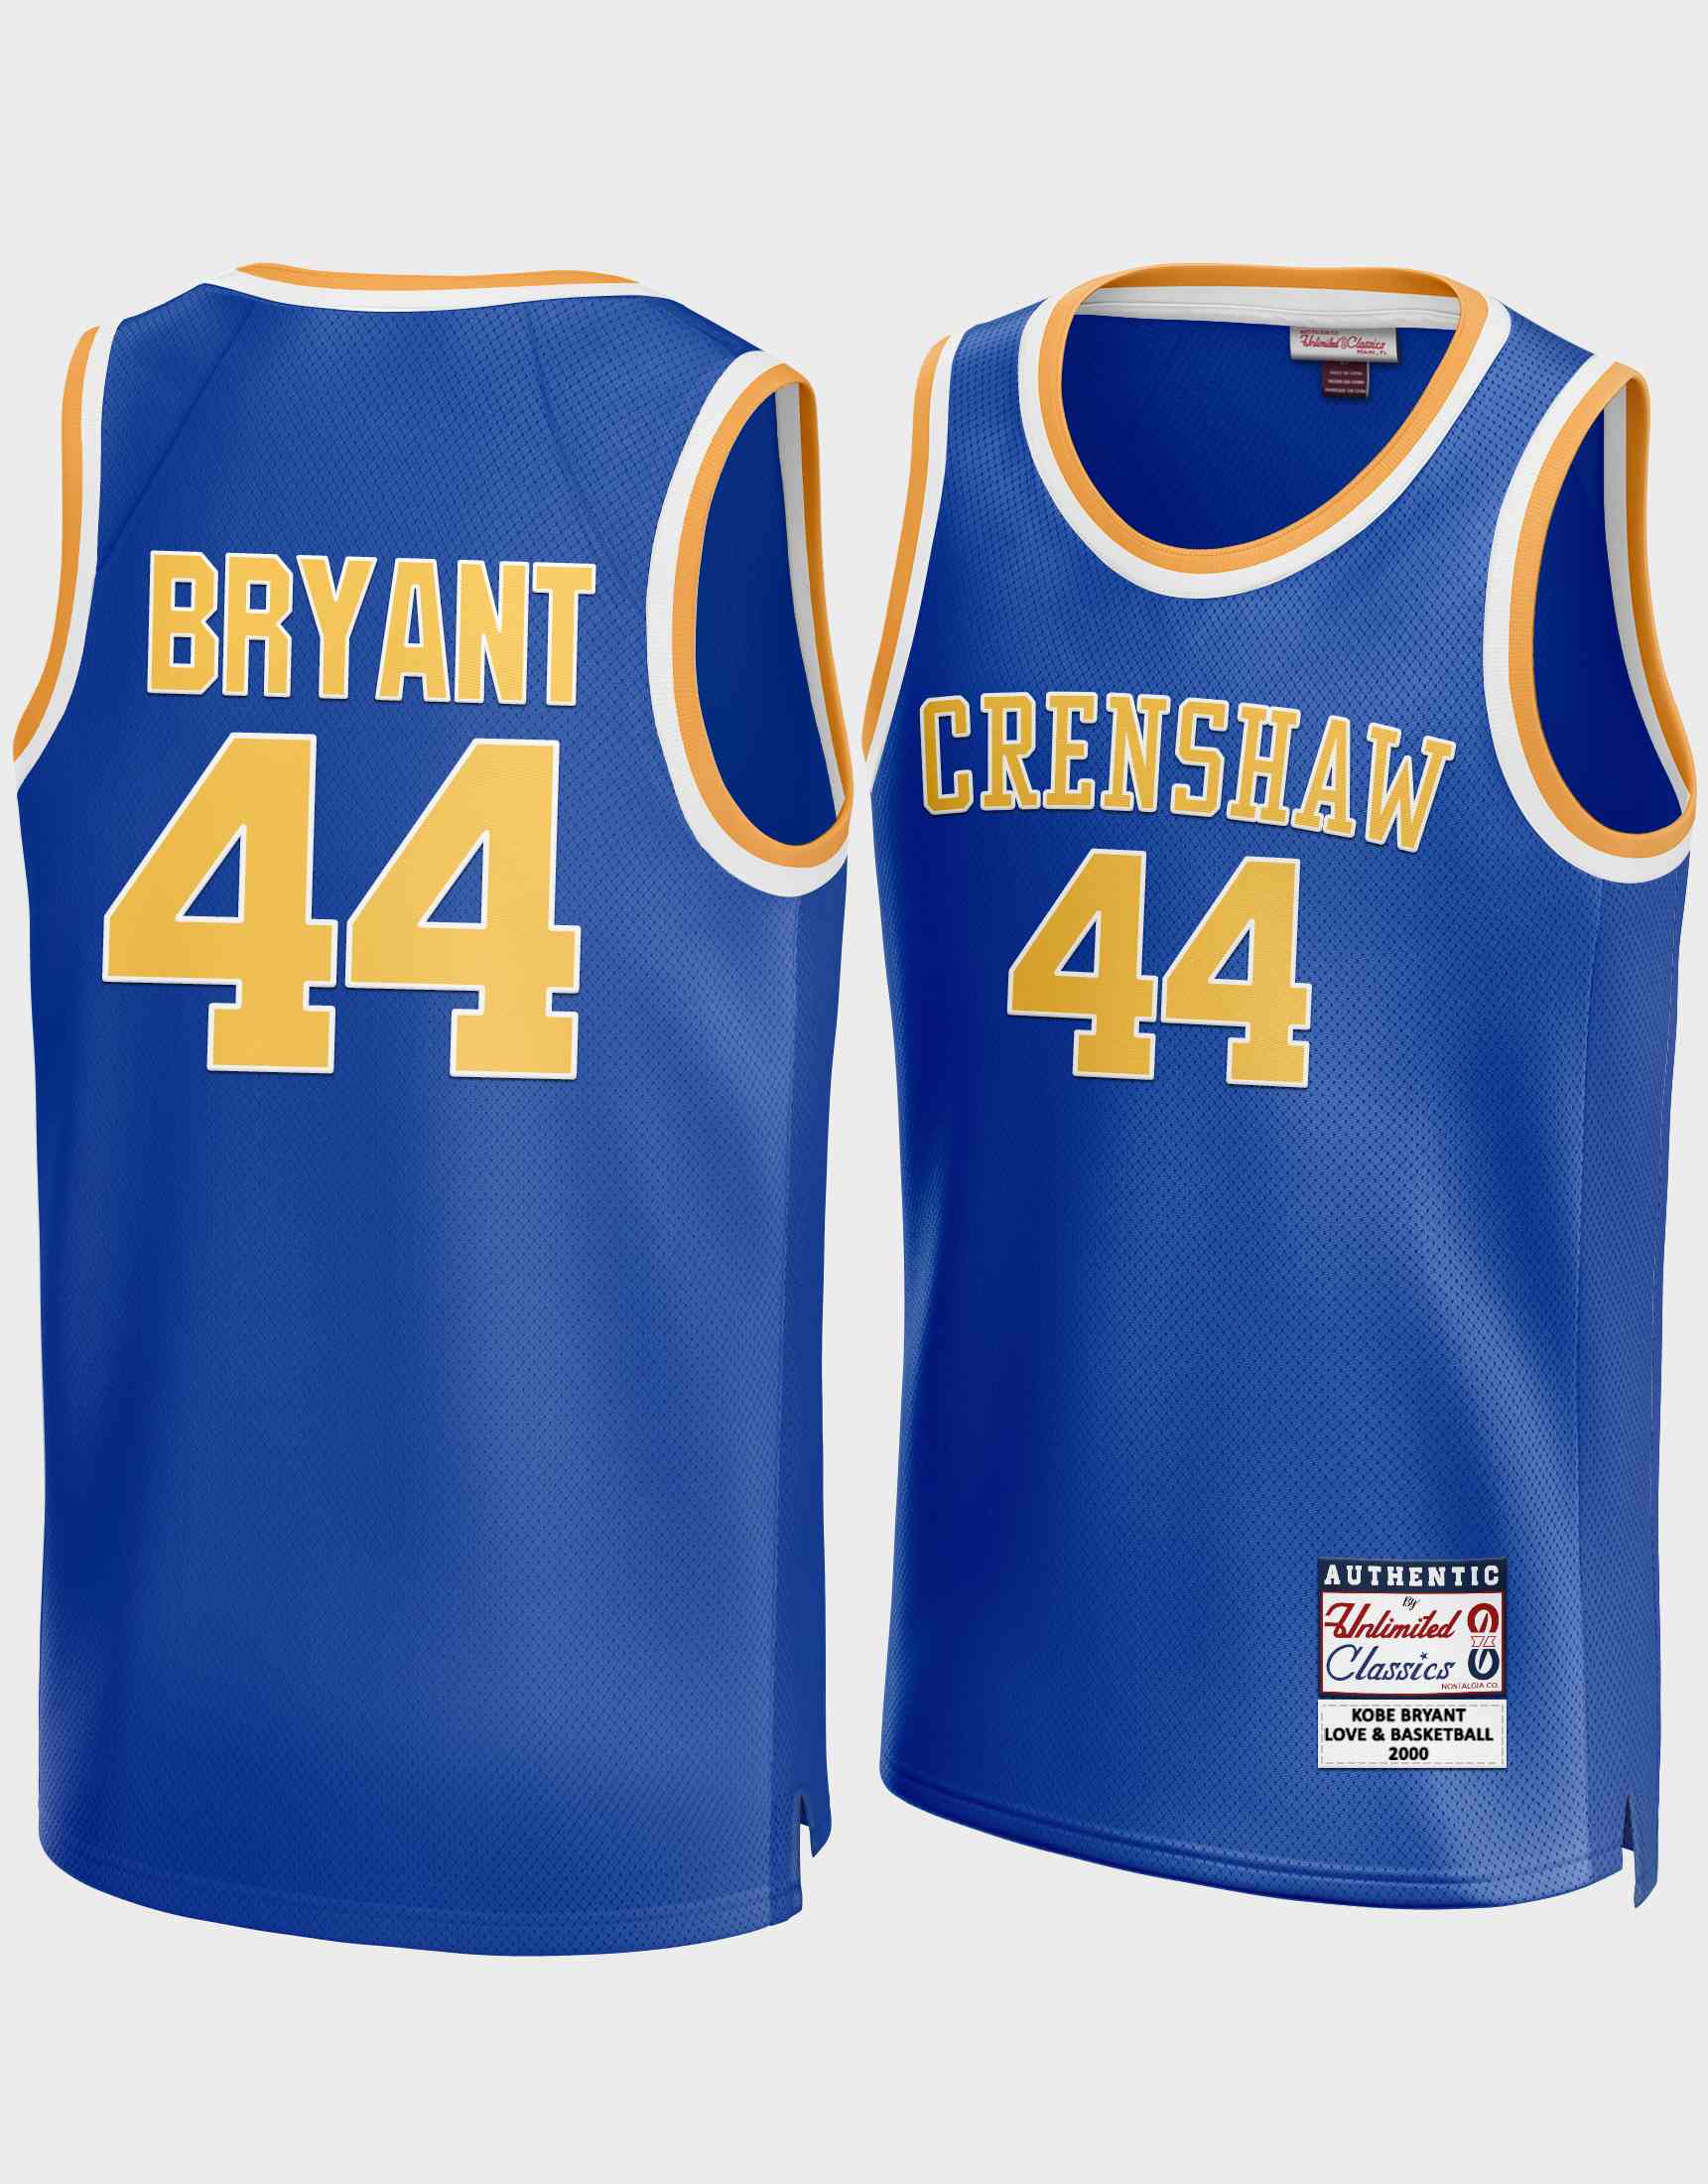 Kobe Bryant highschool jersey